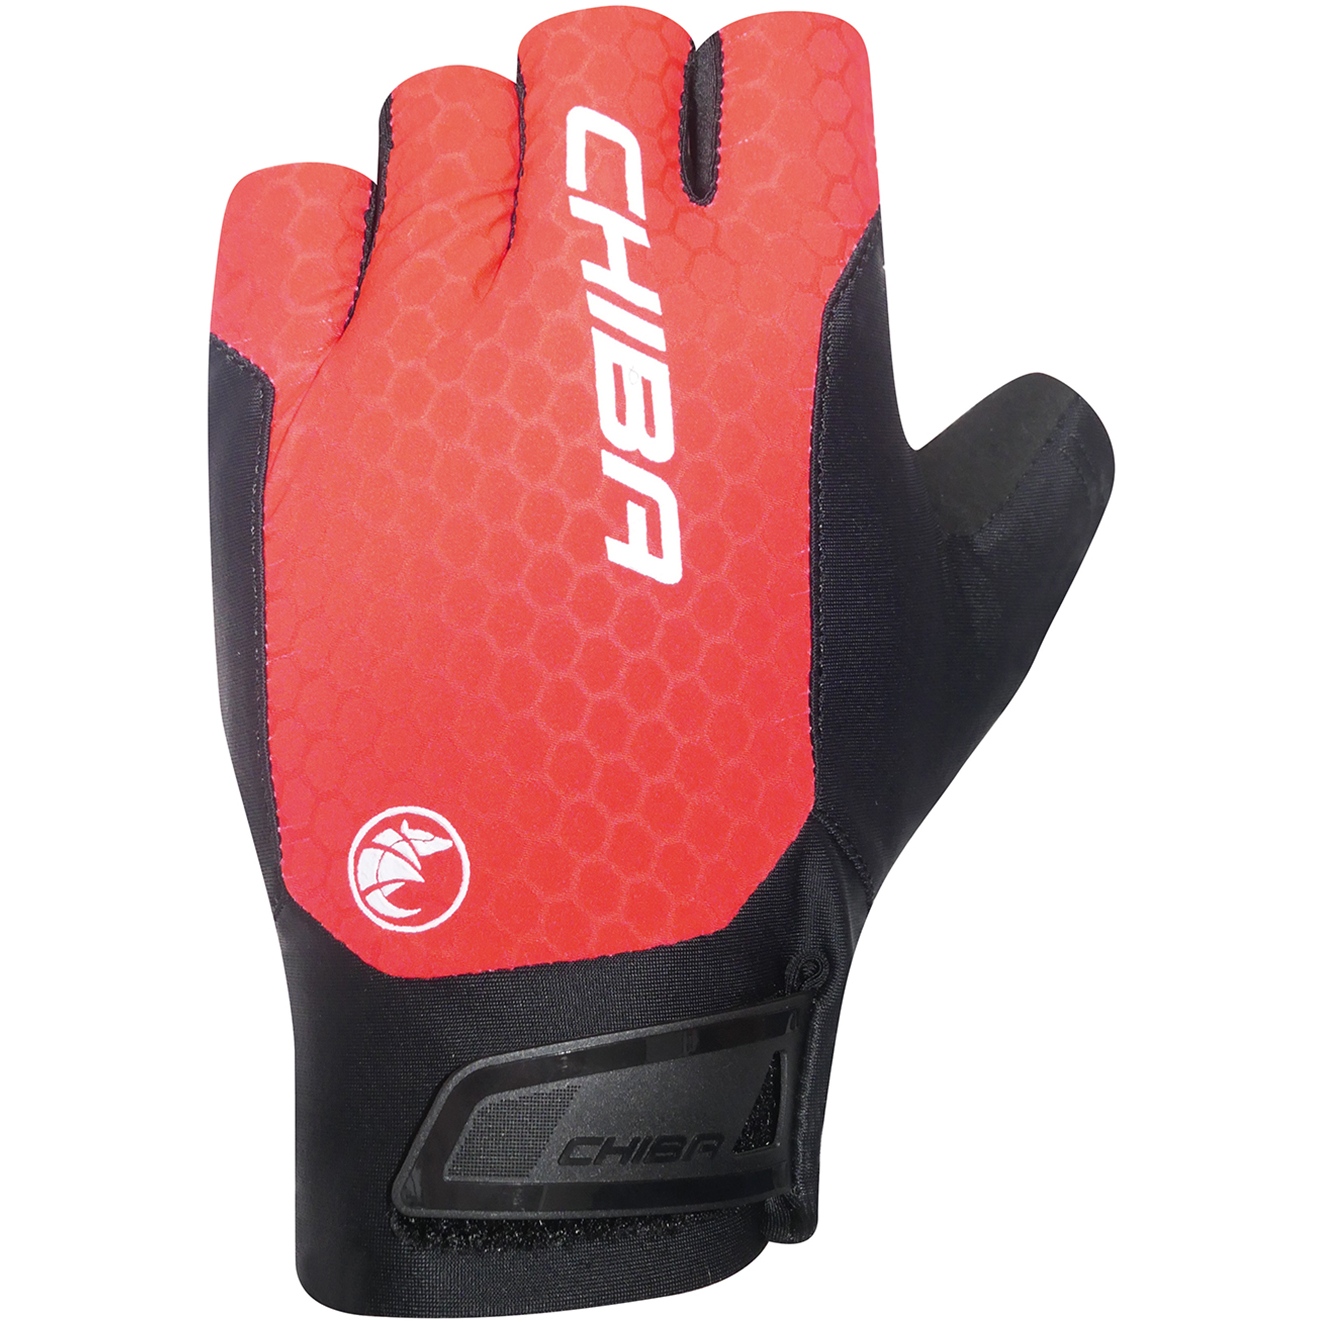 Produktbild von Chiba Pure Race II Kurzfinger-Handschuhe - rot